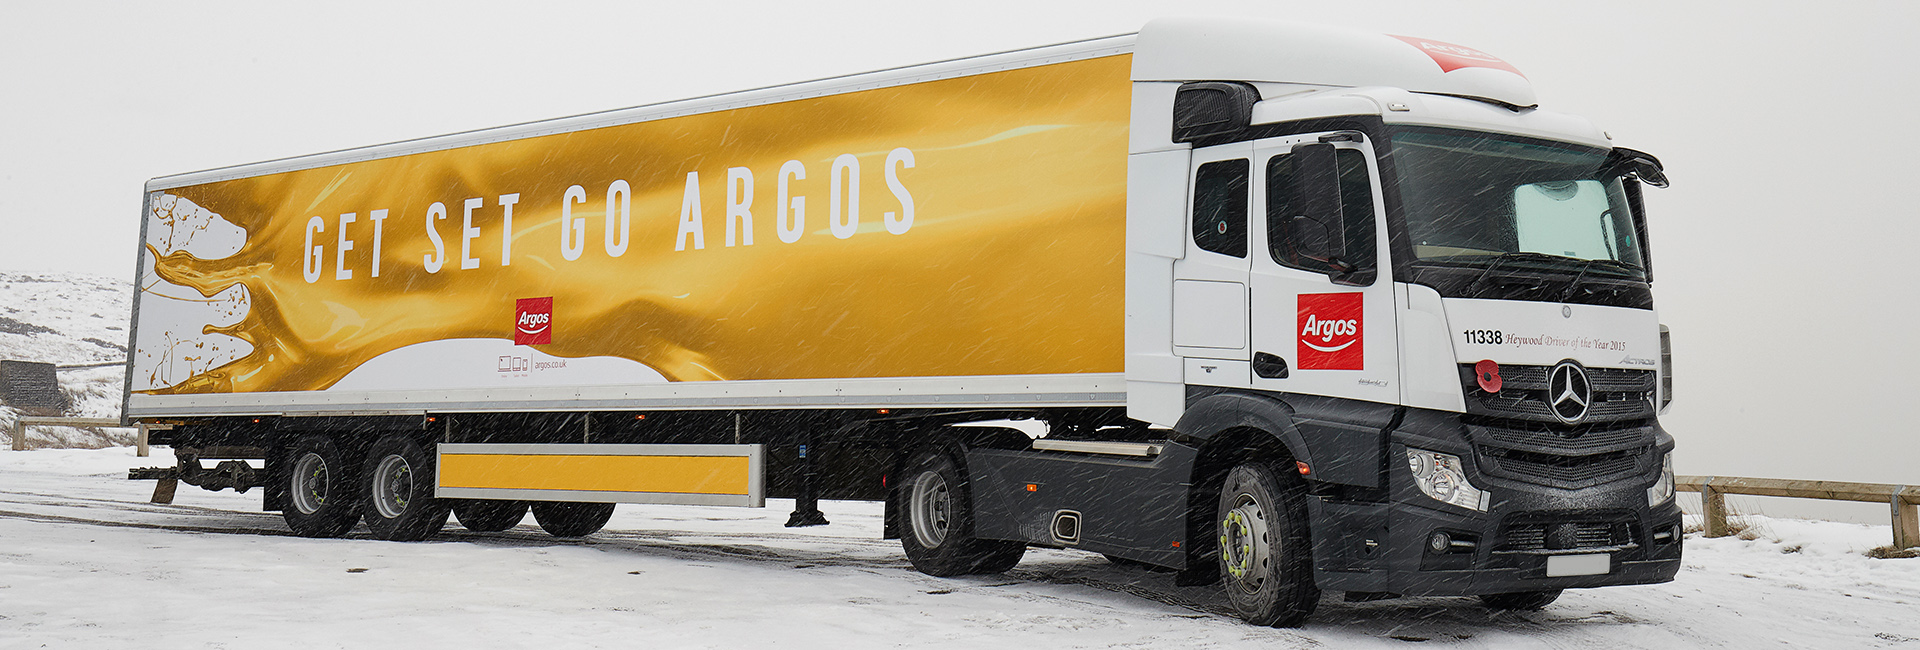 Case study - Argos box van trailers front 34 side